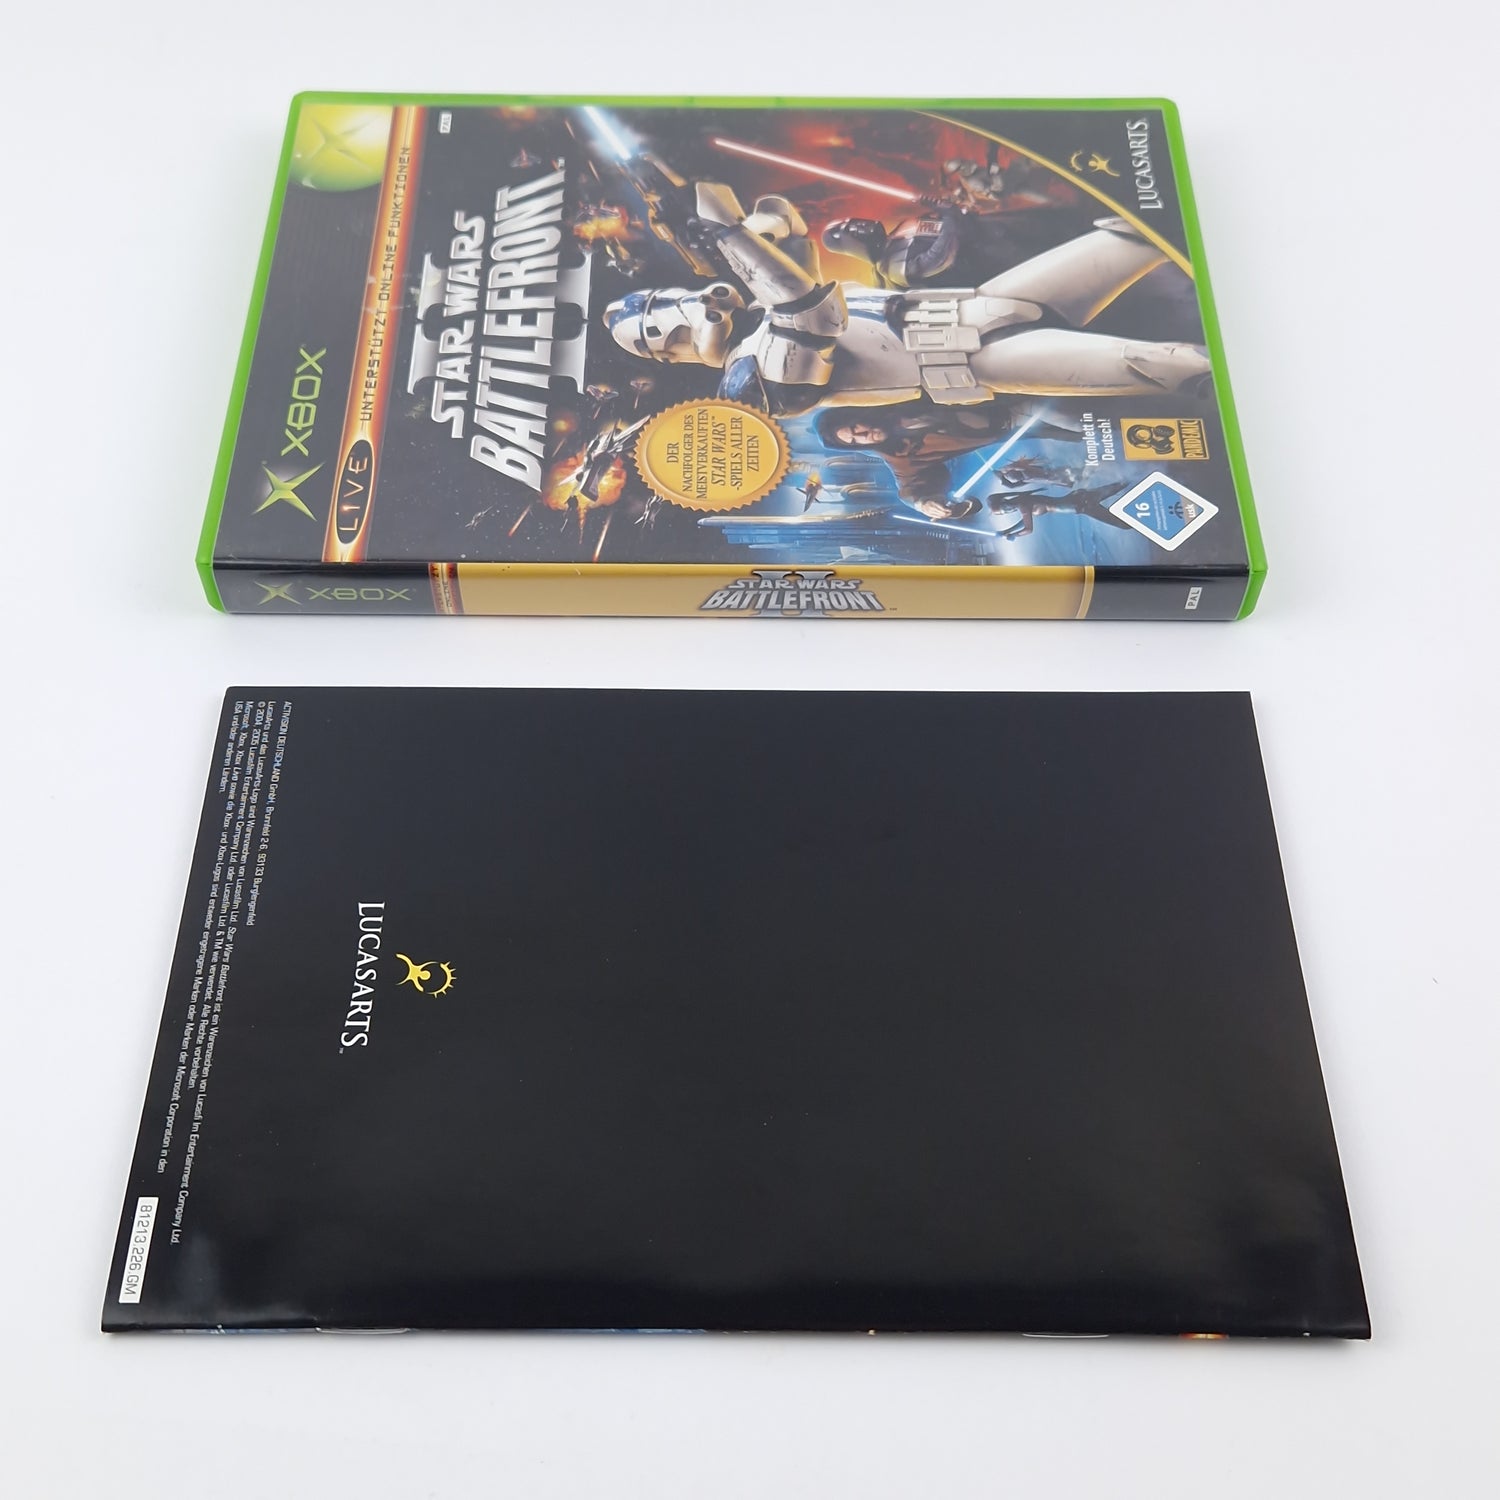 Microsoft Xbox Classic Game: Star Wars Battlefront II 2 - OVP Instructions CD PAL